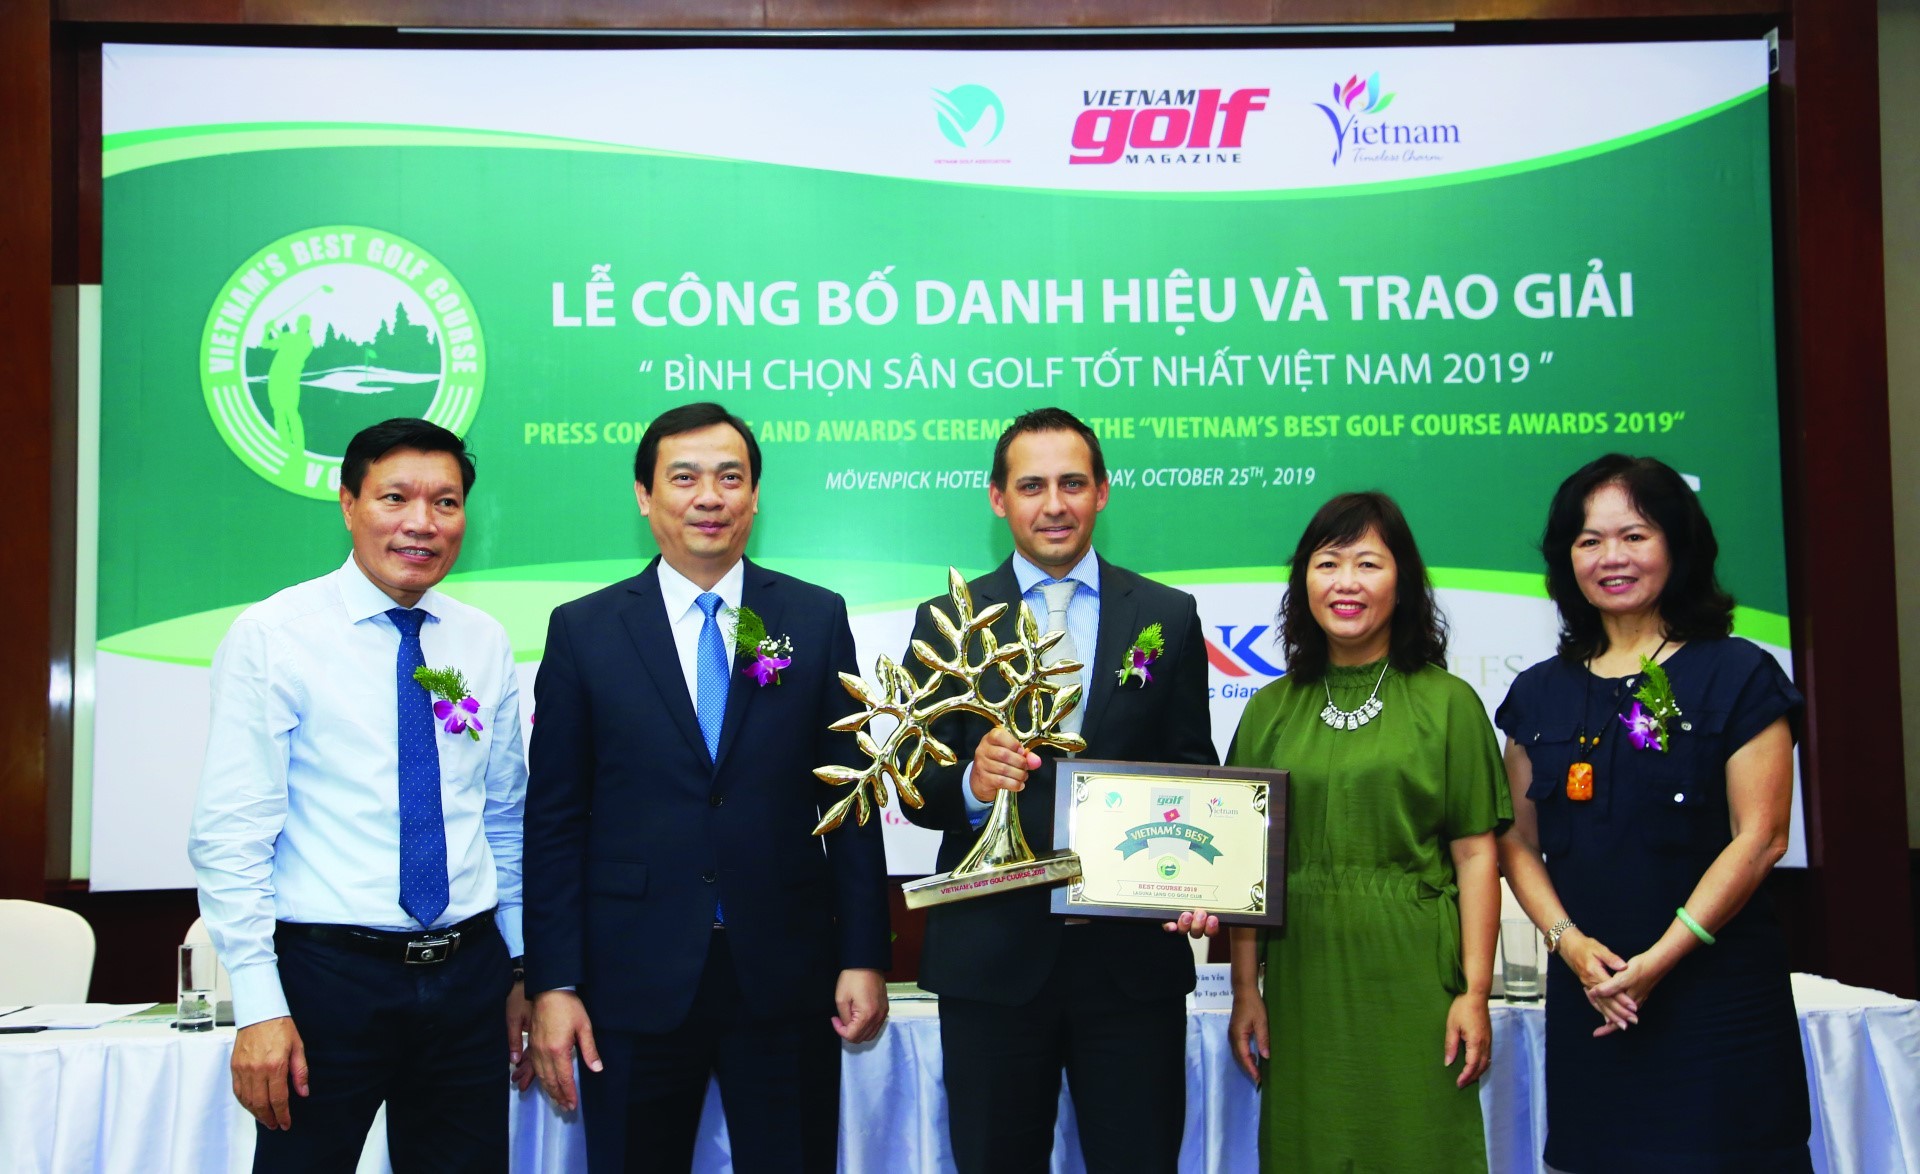 vietnam-golf-leisure-awards-gop-phan-quang-ba-du-lich-golf-viet2-dulichgiaitri-du-lich-1660470048.jpg